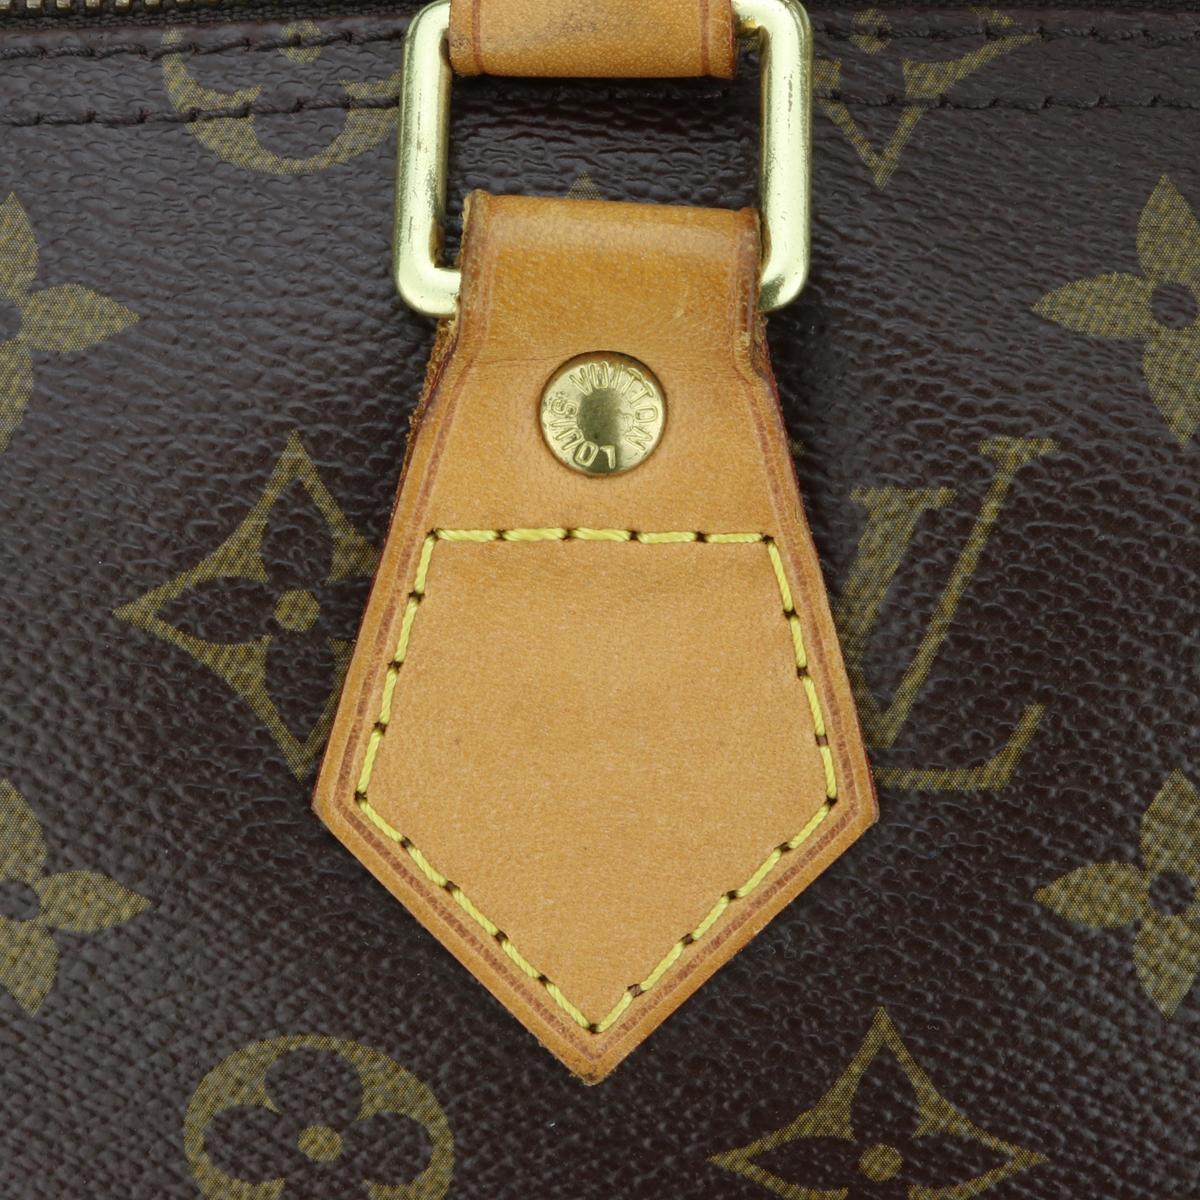 Louis Vuitton Speedy Bandoulière 35 Bag in Monogram 2011 12